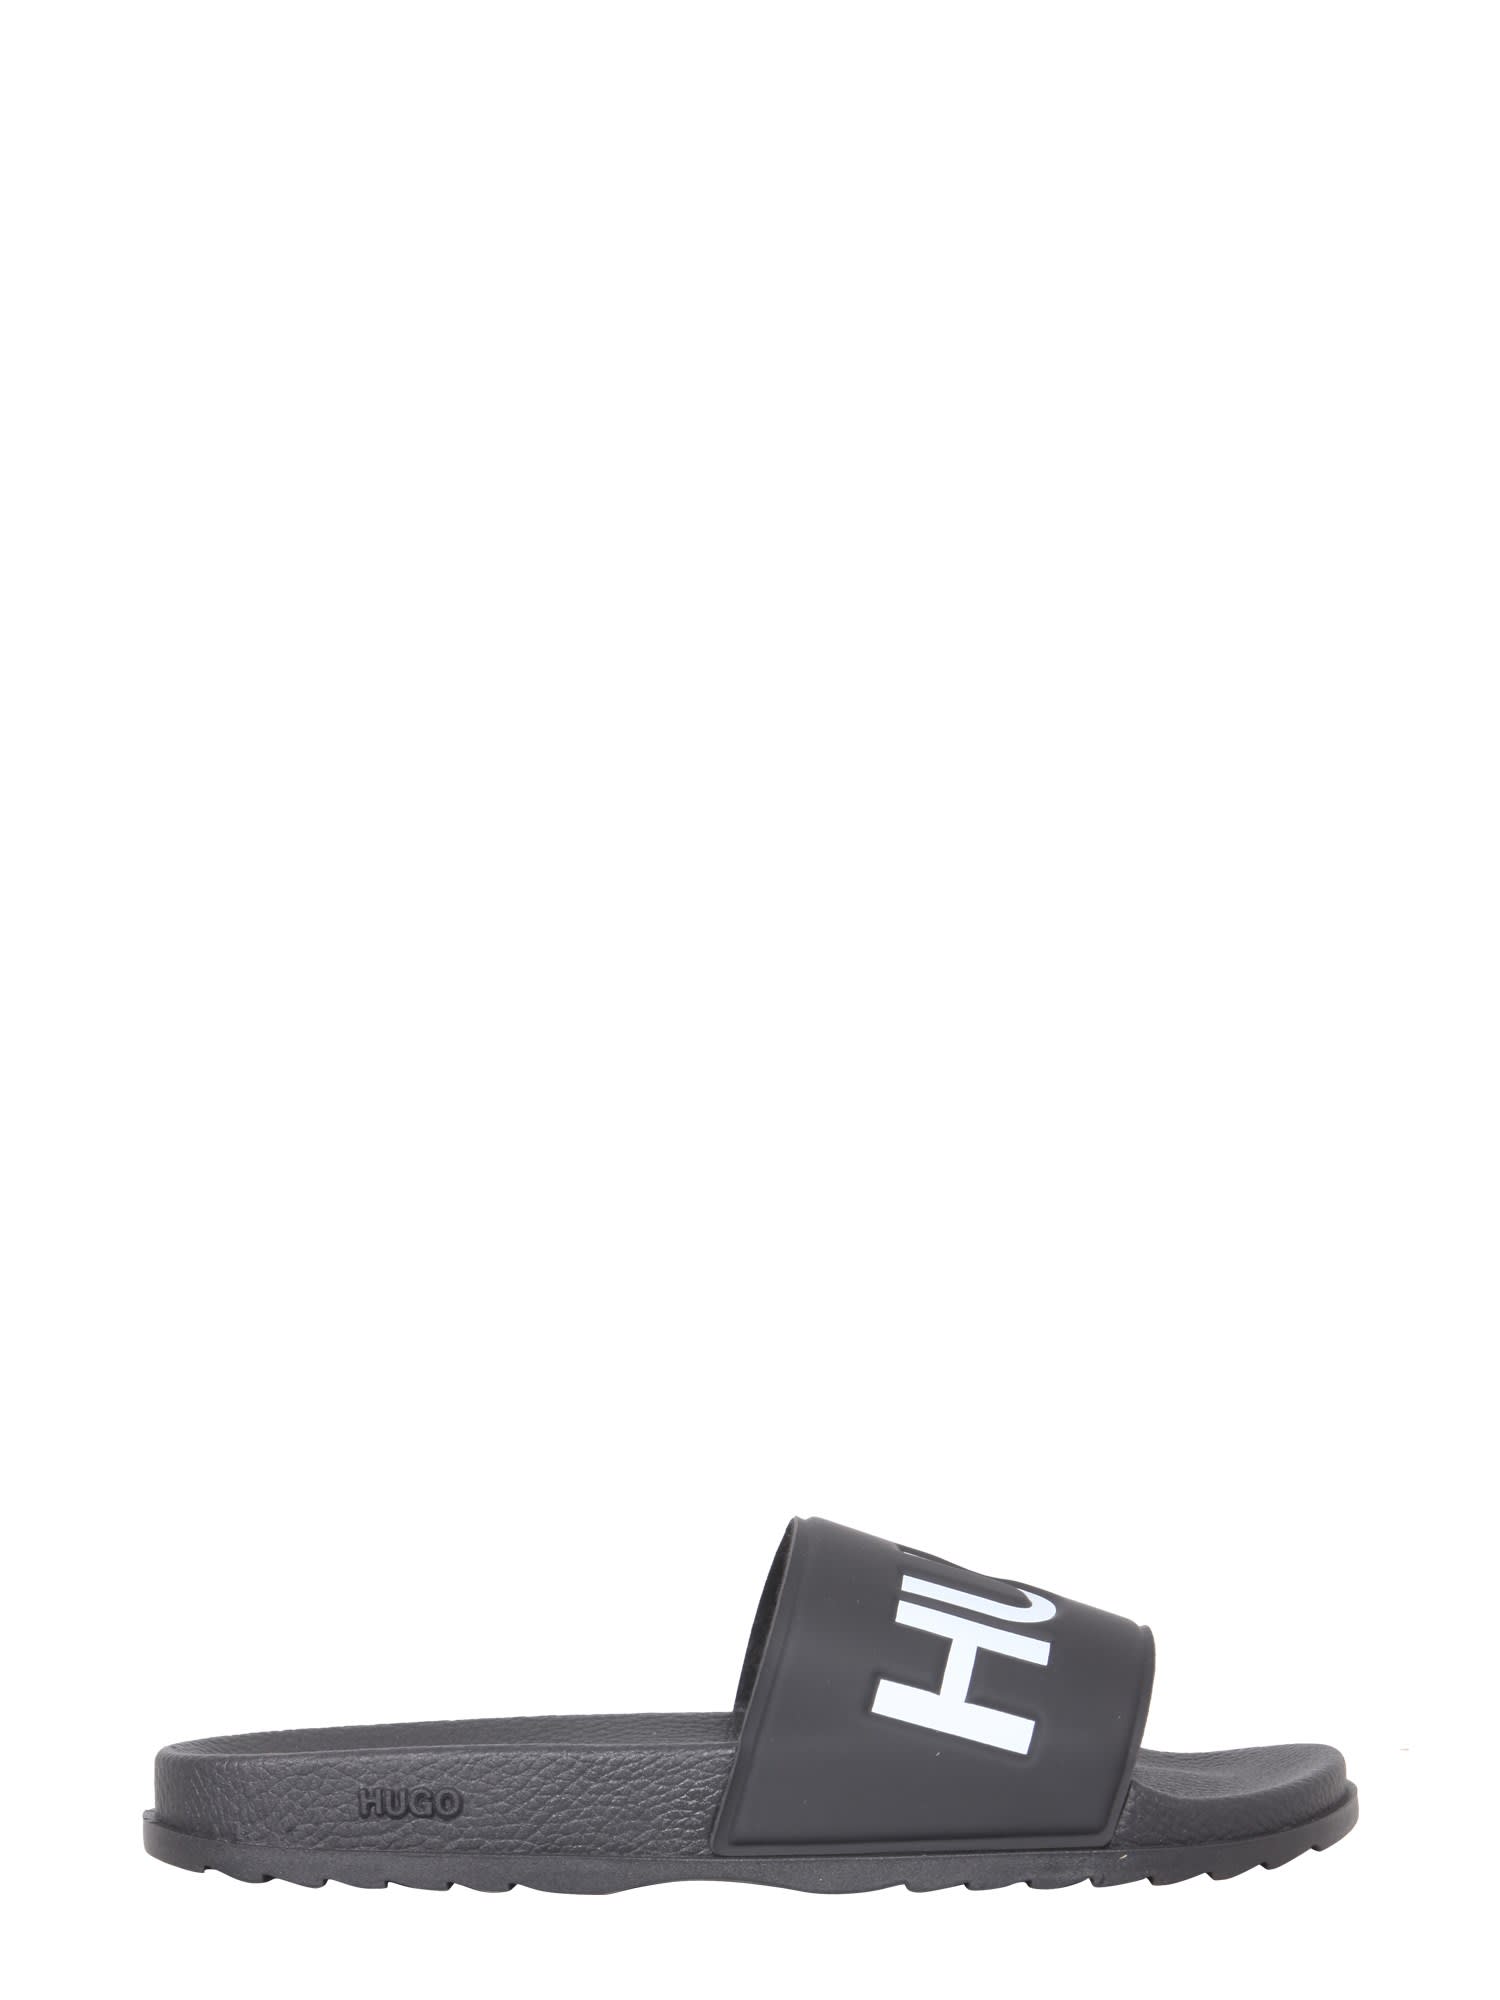 Hugo Boss Slide Match Sandals